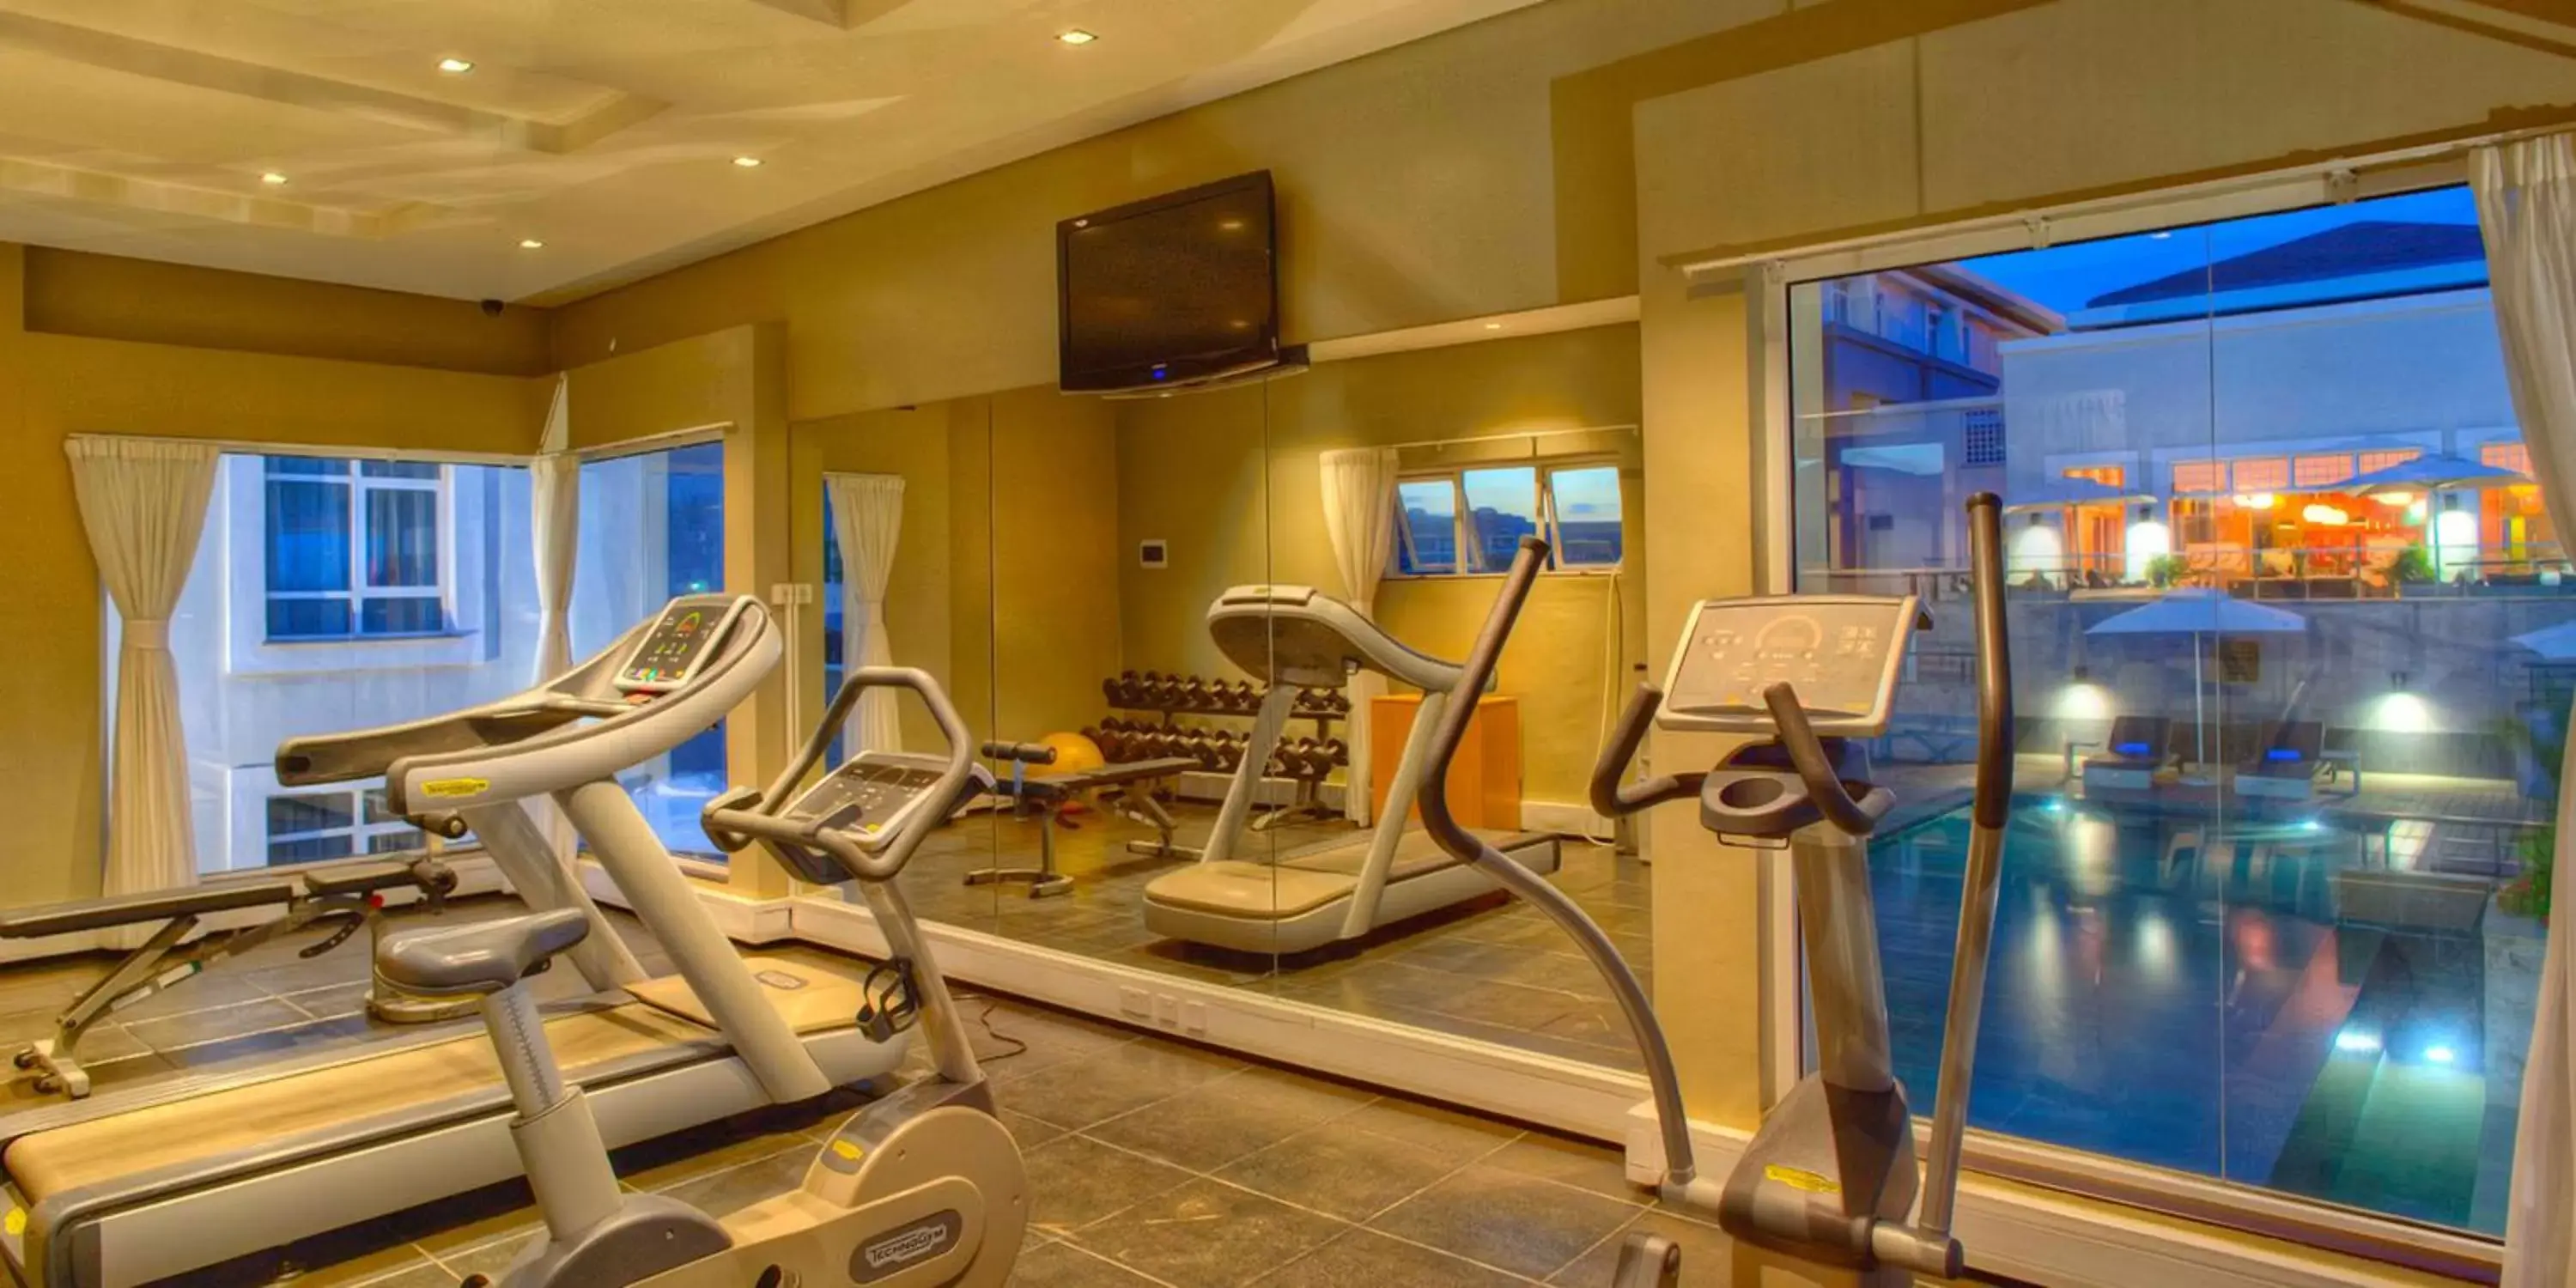 Fitness centre/facilities, Fitness Center/Facilities in Eka Hotel Nairobi